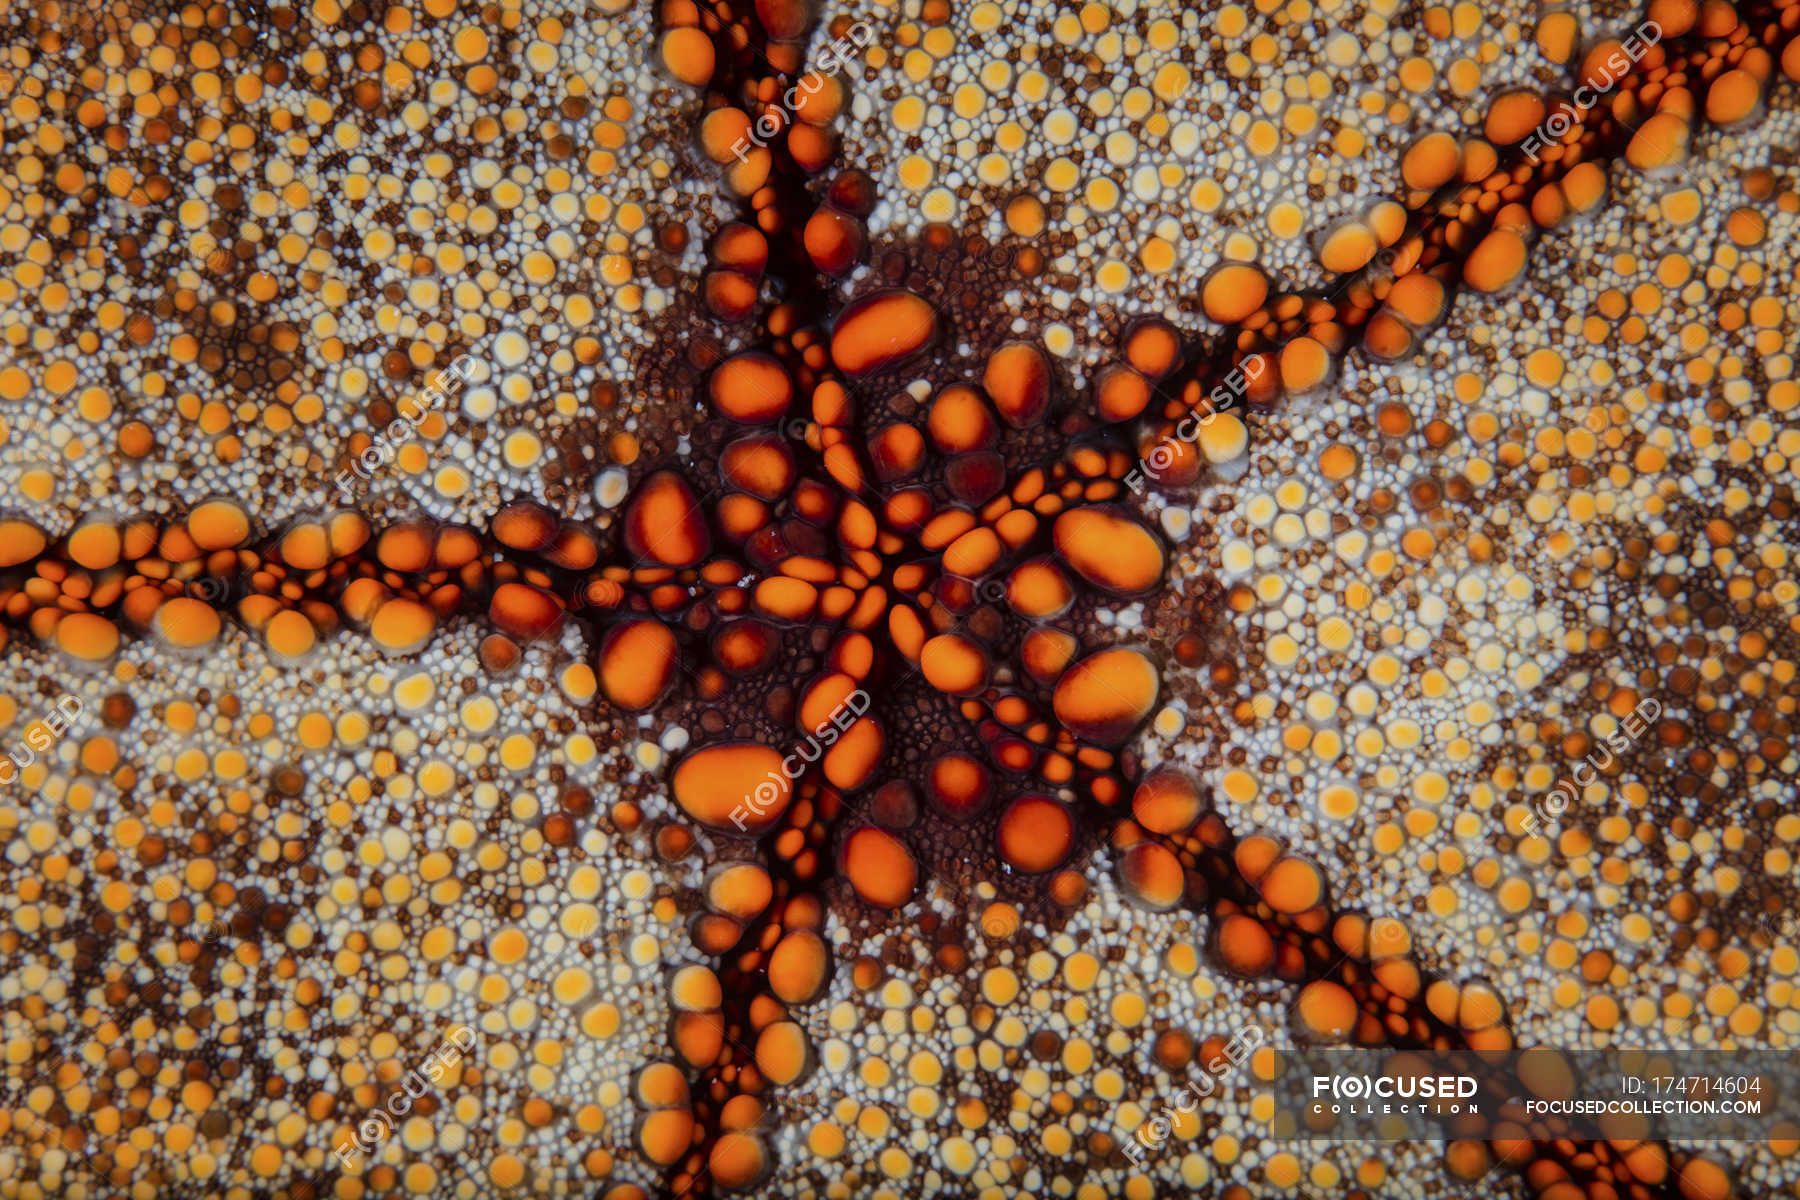 Pin cushion starfish closeup shot — Stock Photo | #174714604